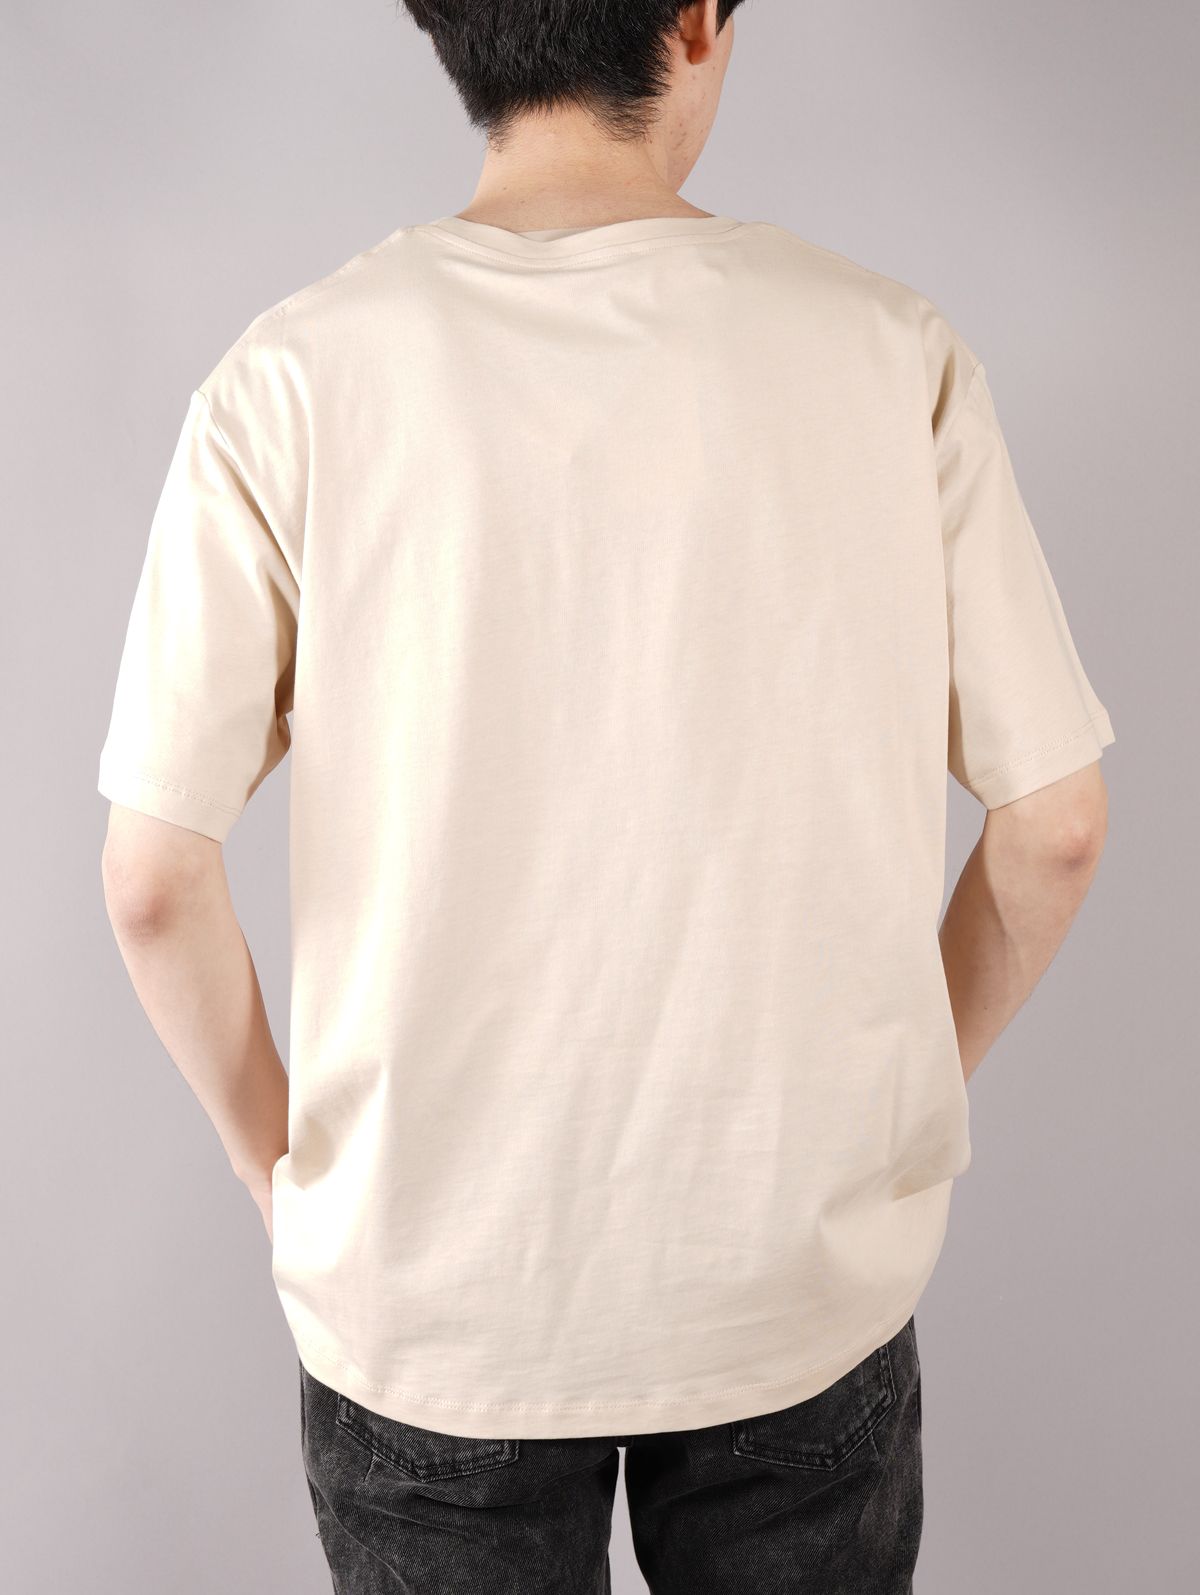 BALMAIN - 【ラスト1点】 BALMAIN TAPE T-SHIRT / ロゴ テープ Tシャツ 